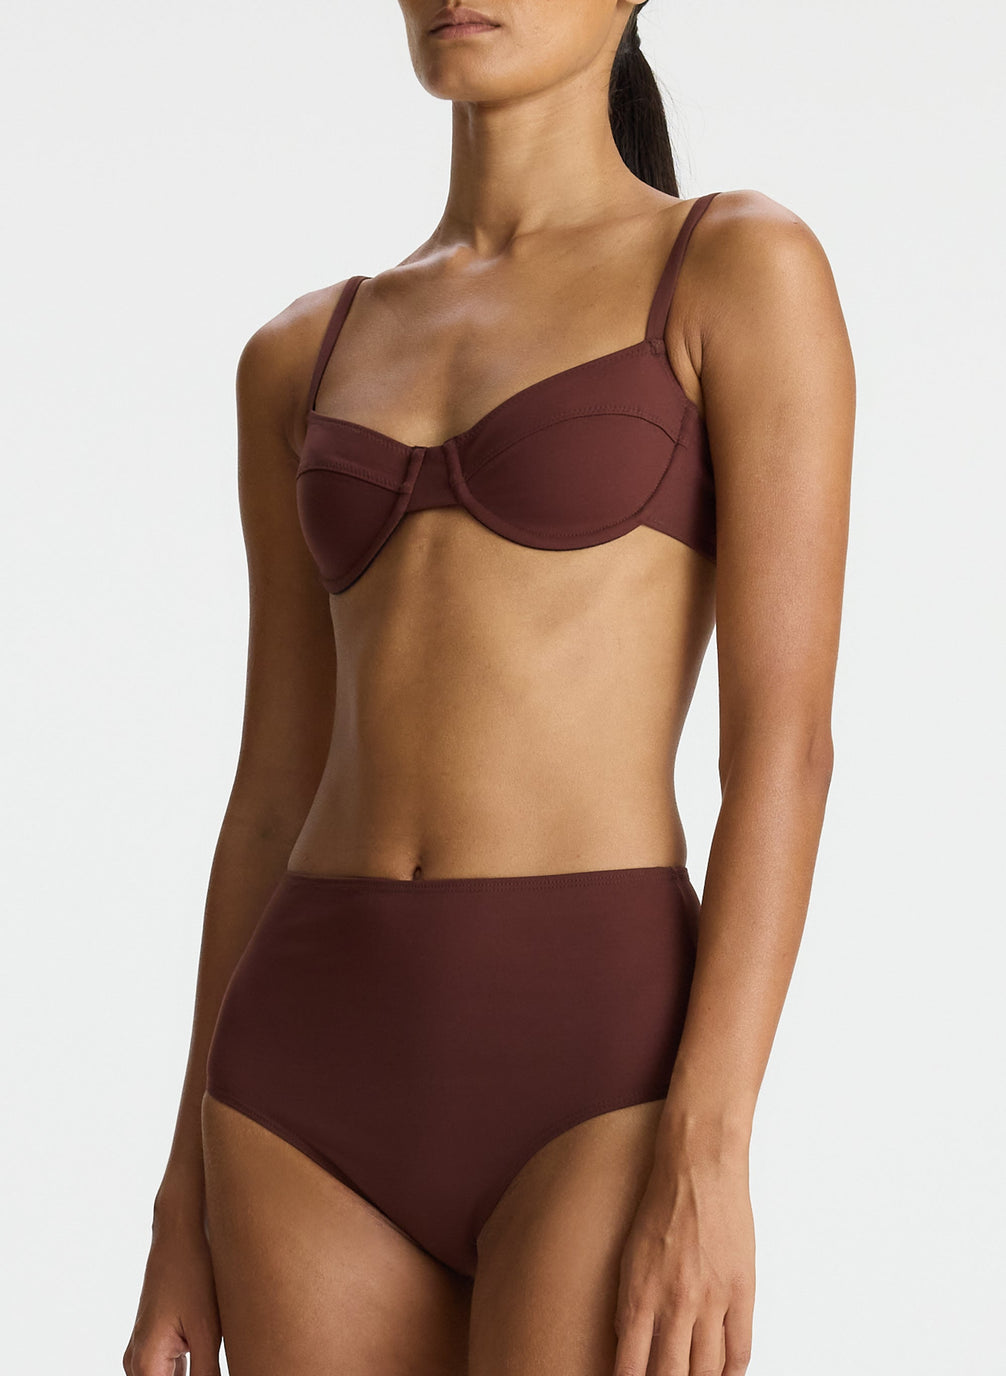 detail view of woman wearing brown bikini set